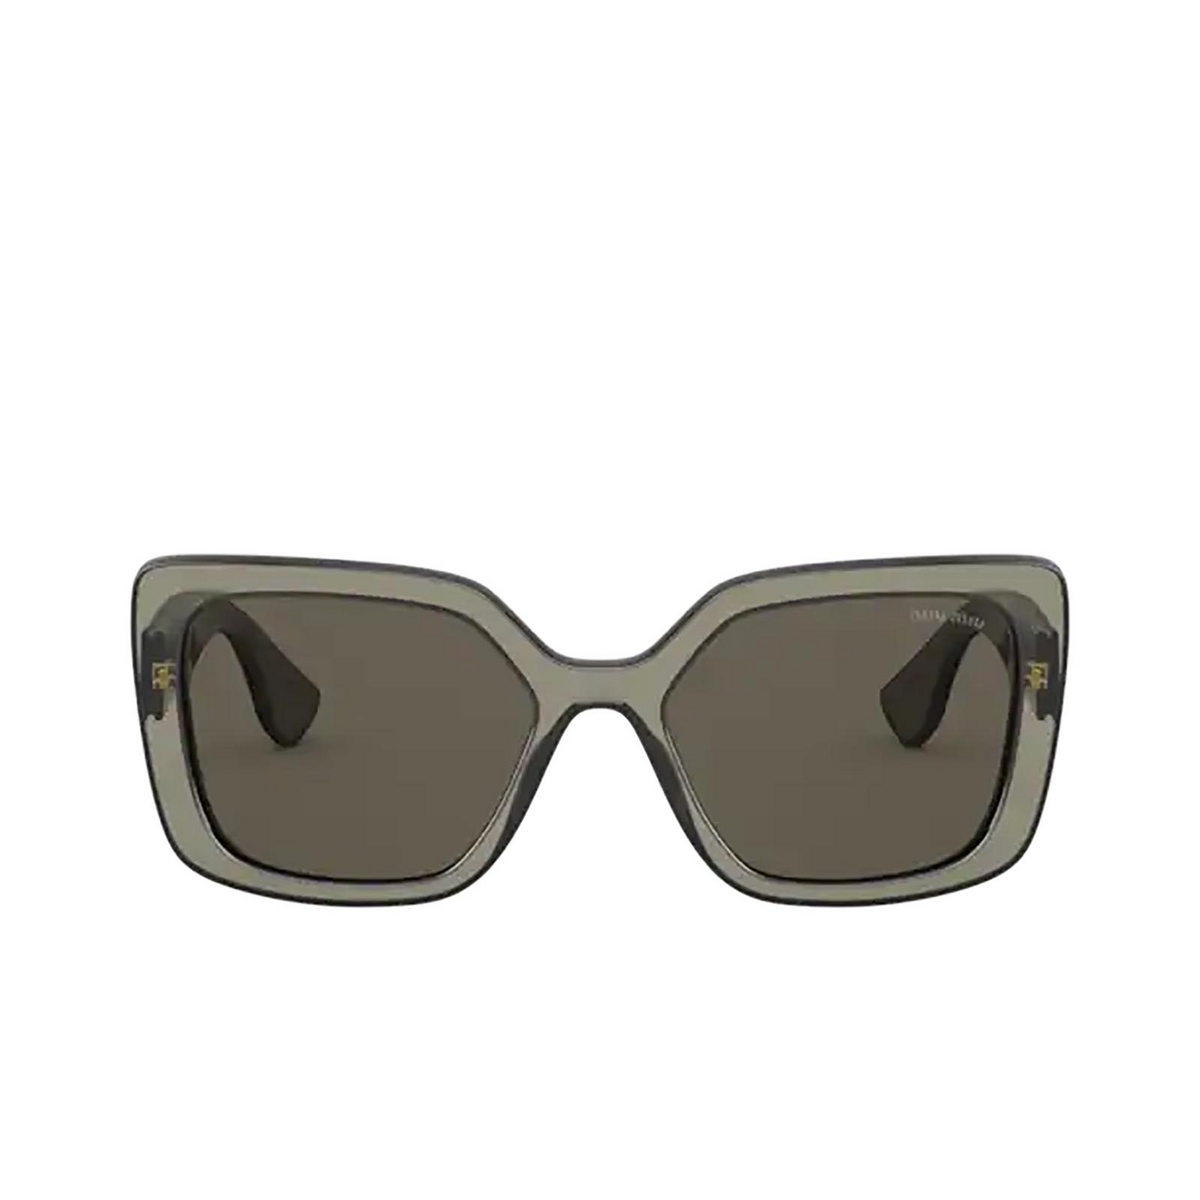 Miu Miu® Square Sunglasses: MU 09VS color Black Transparent 08H5S2 - front view.